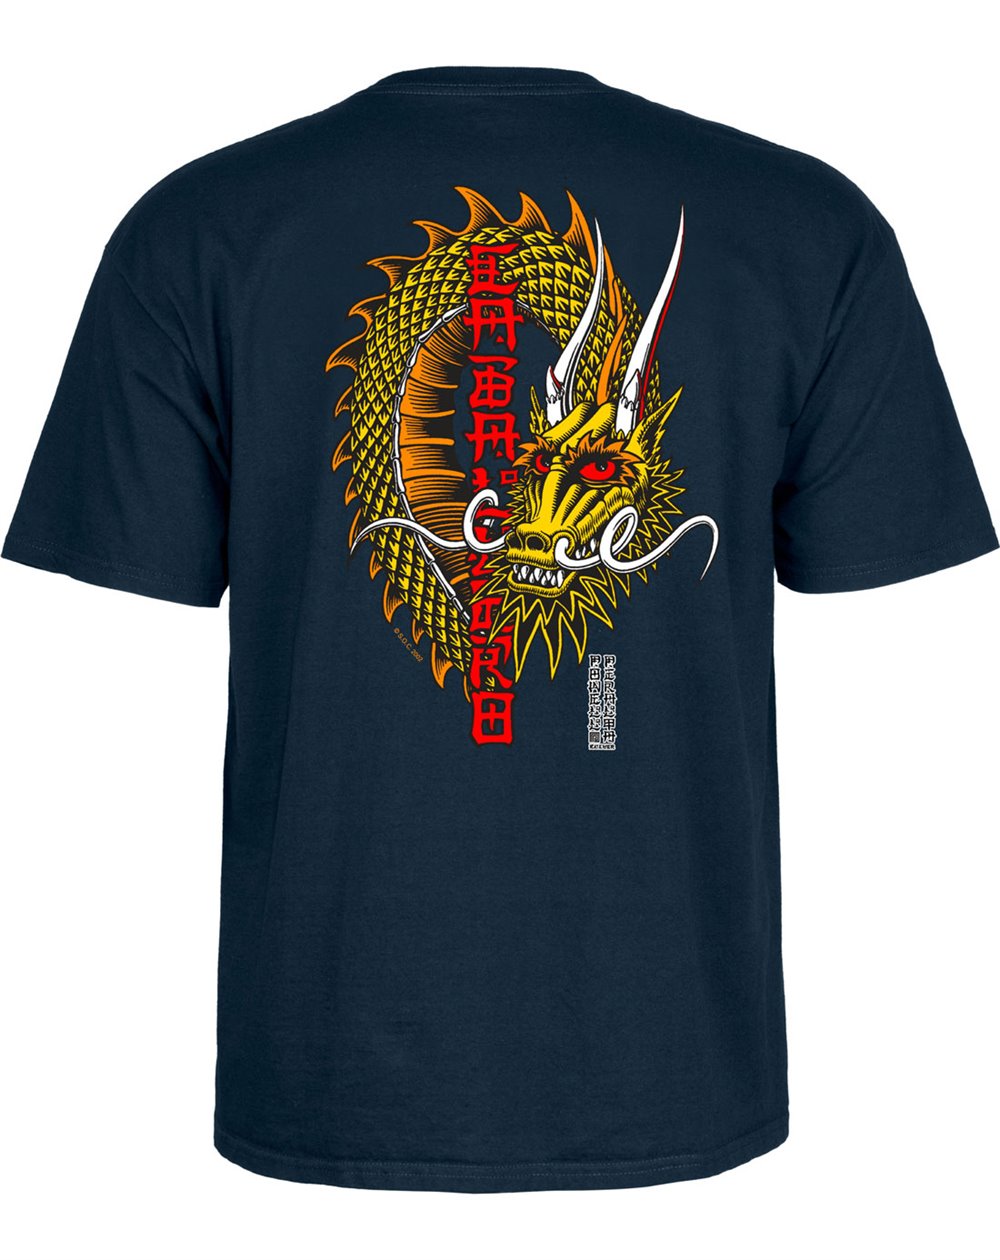 Powell Peralta T-Shirt Uomo Steve Caballero Ban This Dragon (Navy)